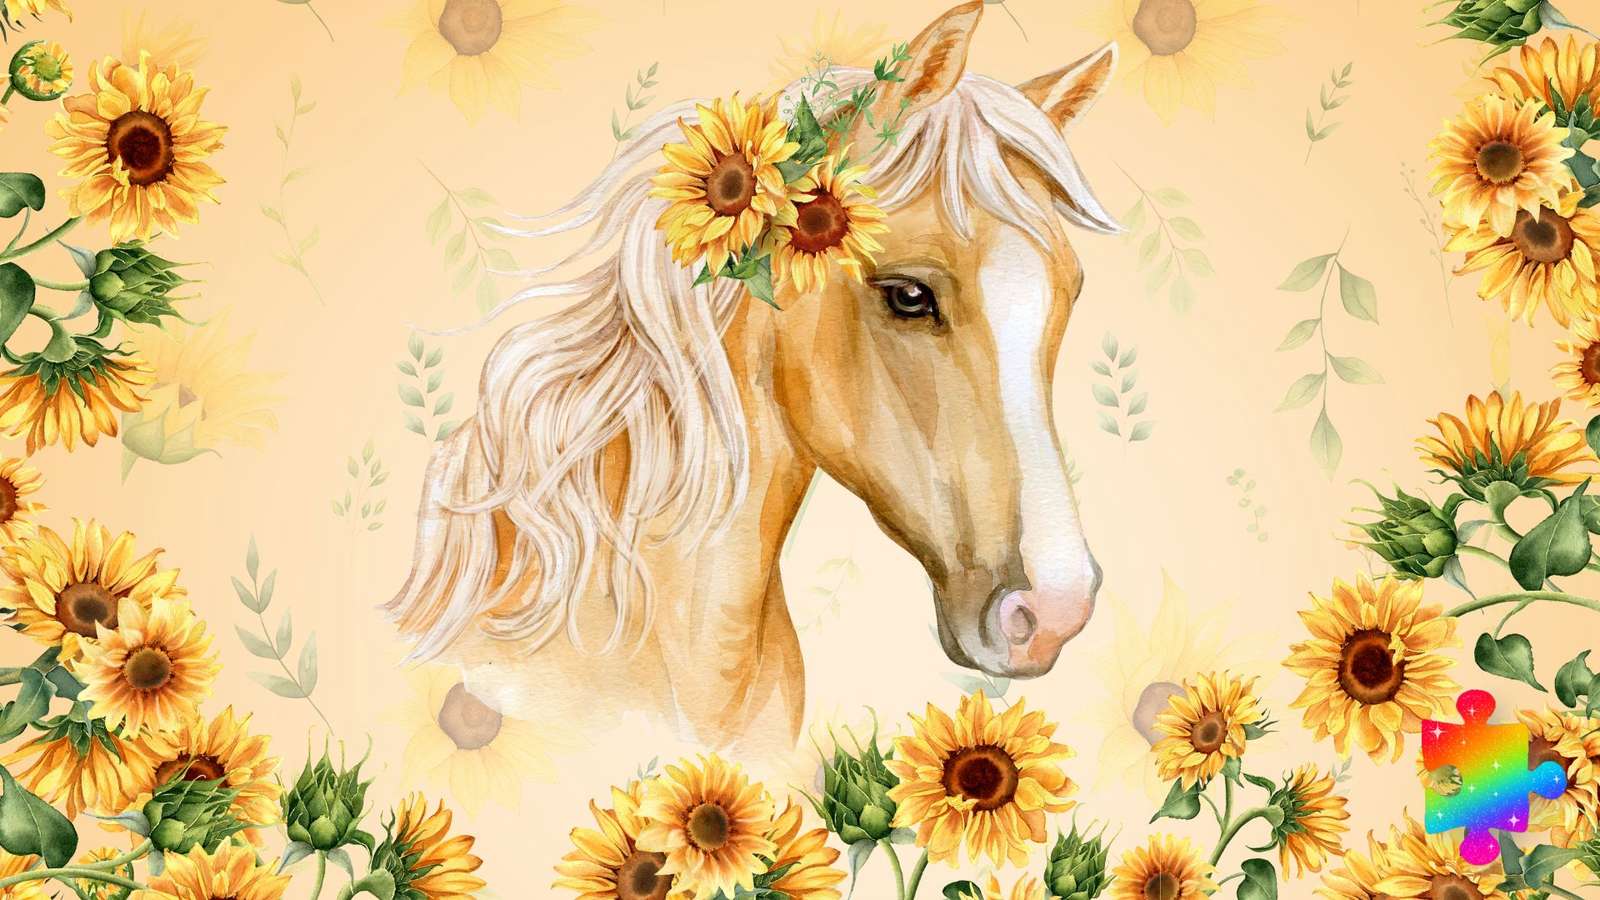 Sunflower Horse online puzzle